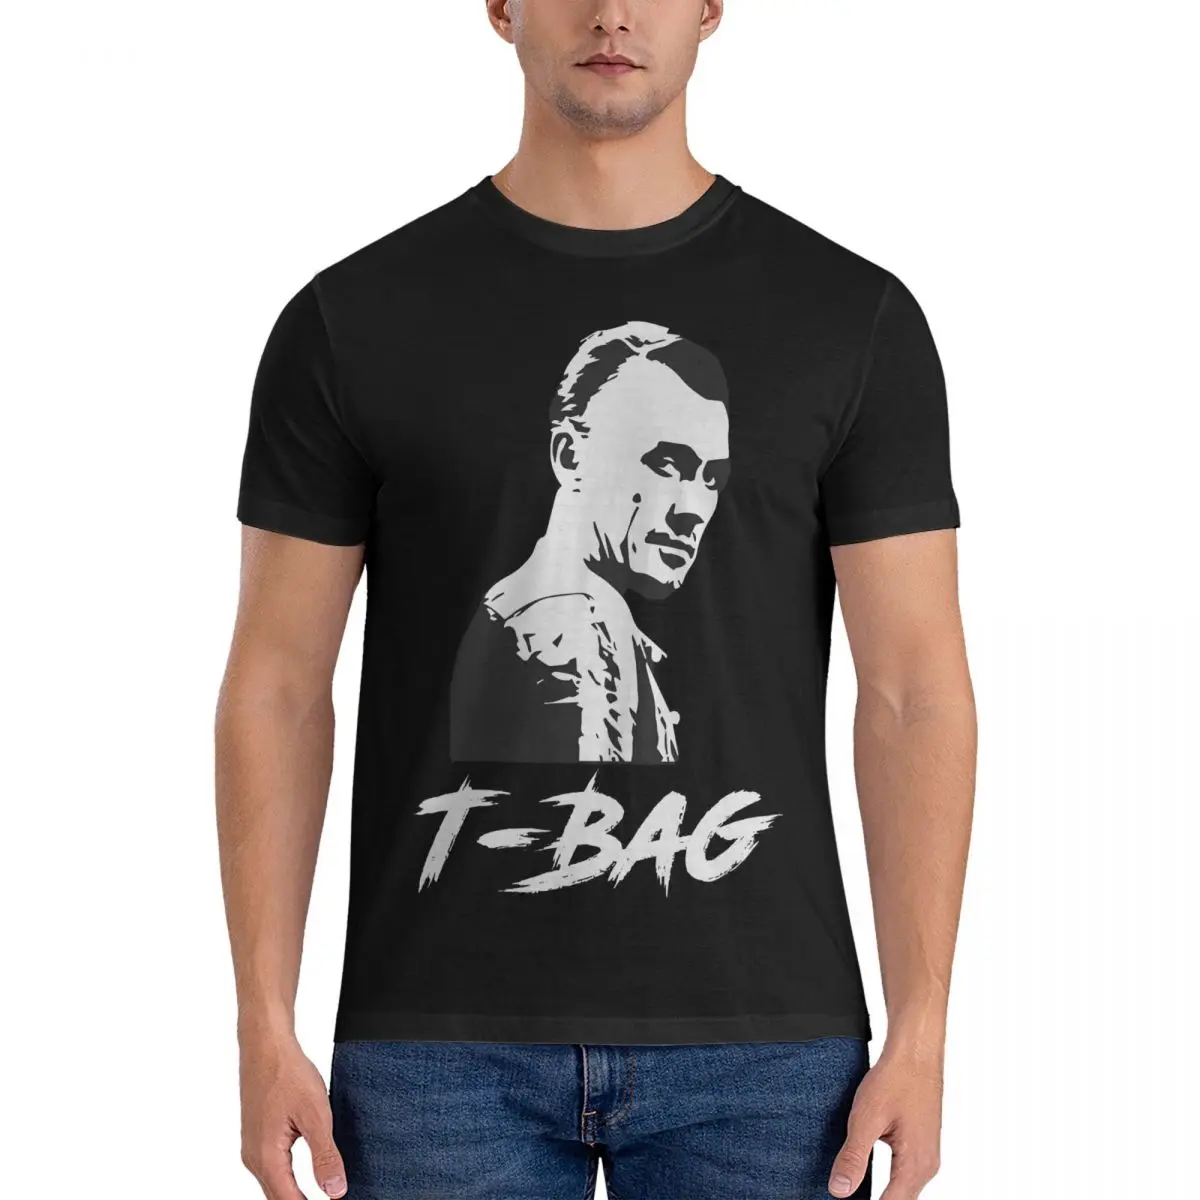 

Men's T-Shirt T-Bag Funny 100% Cotton Tee Shirt Short Sleeve Prison Break T Shirts Crew Neck Clothes Gift Idea